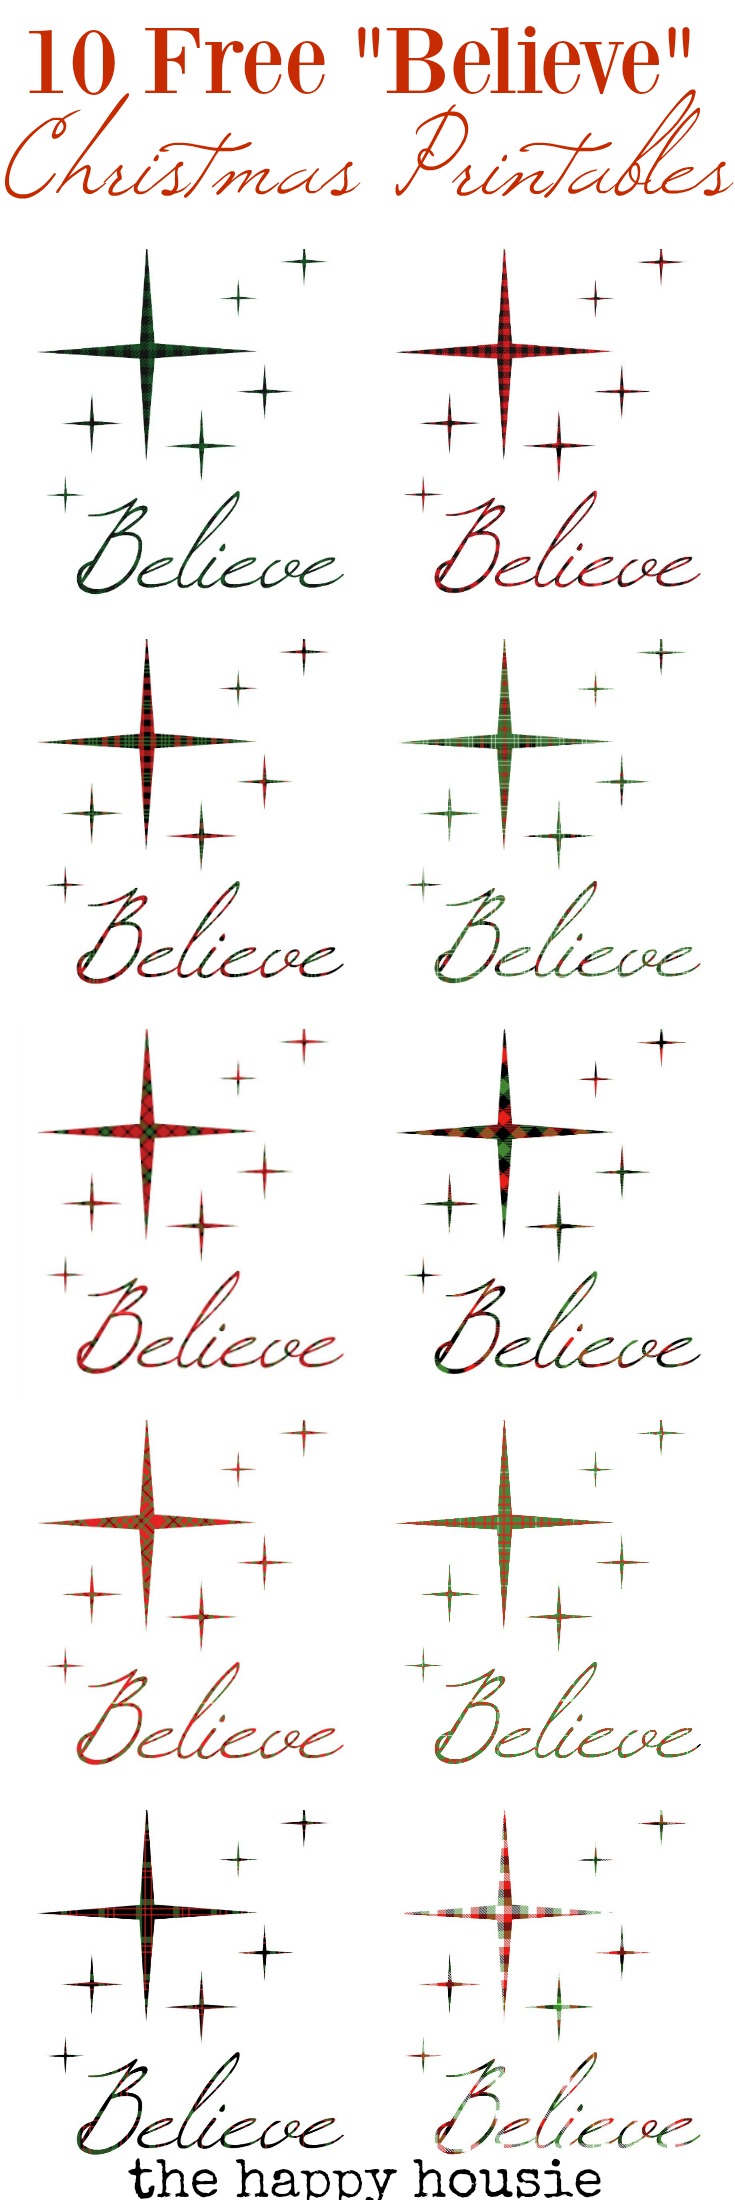 10 Believe Free Printable poster.